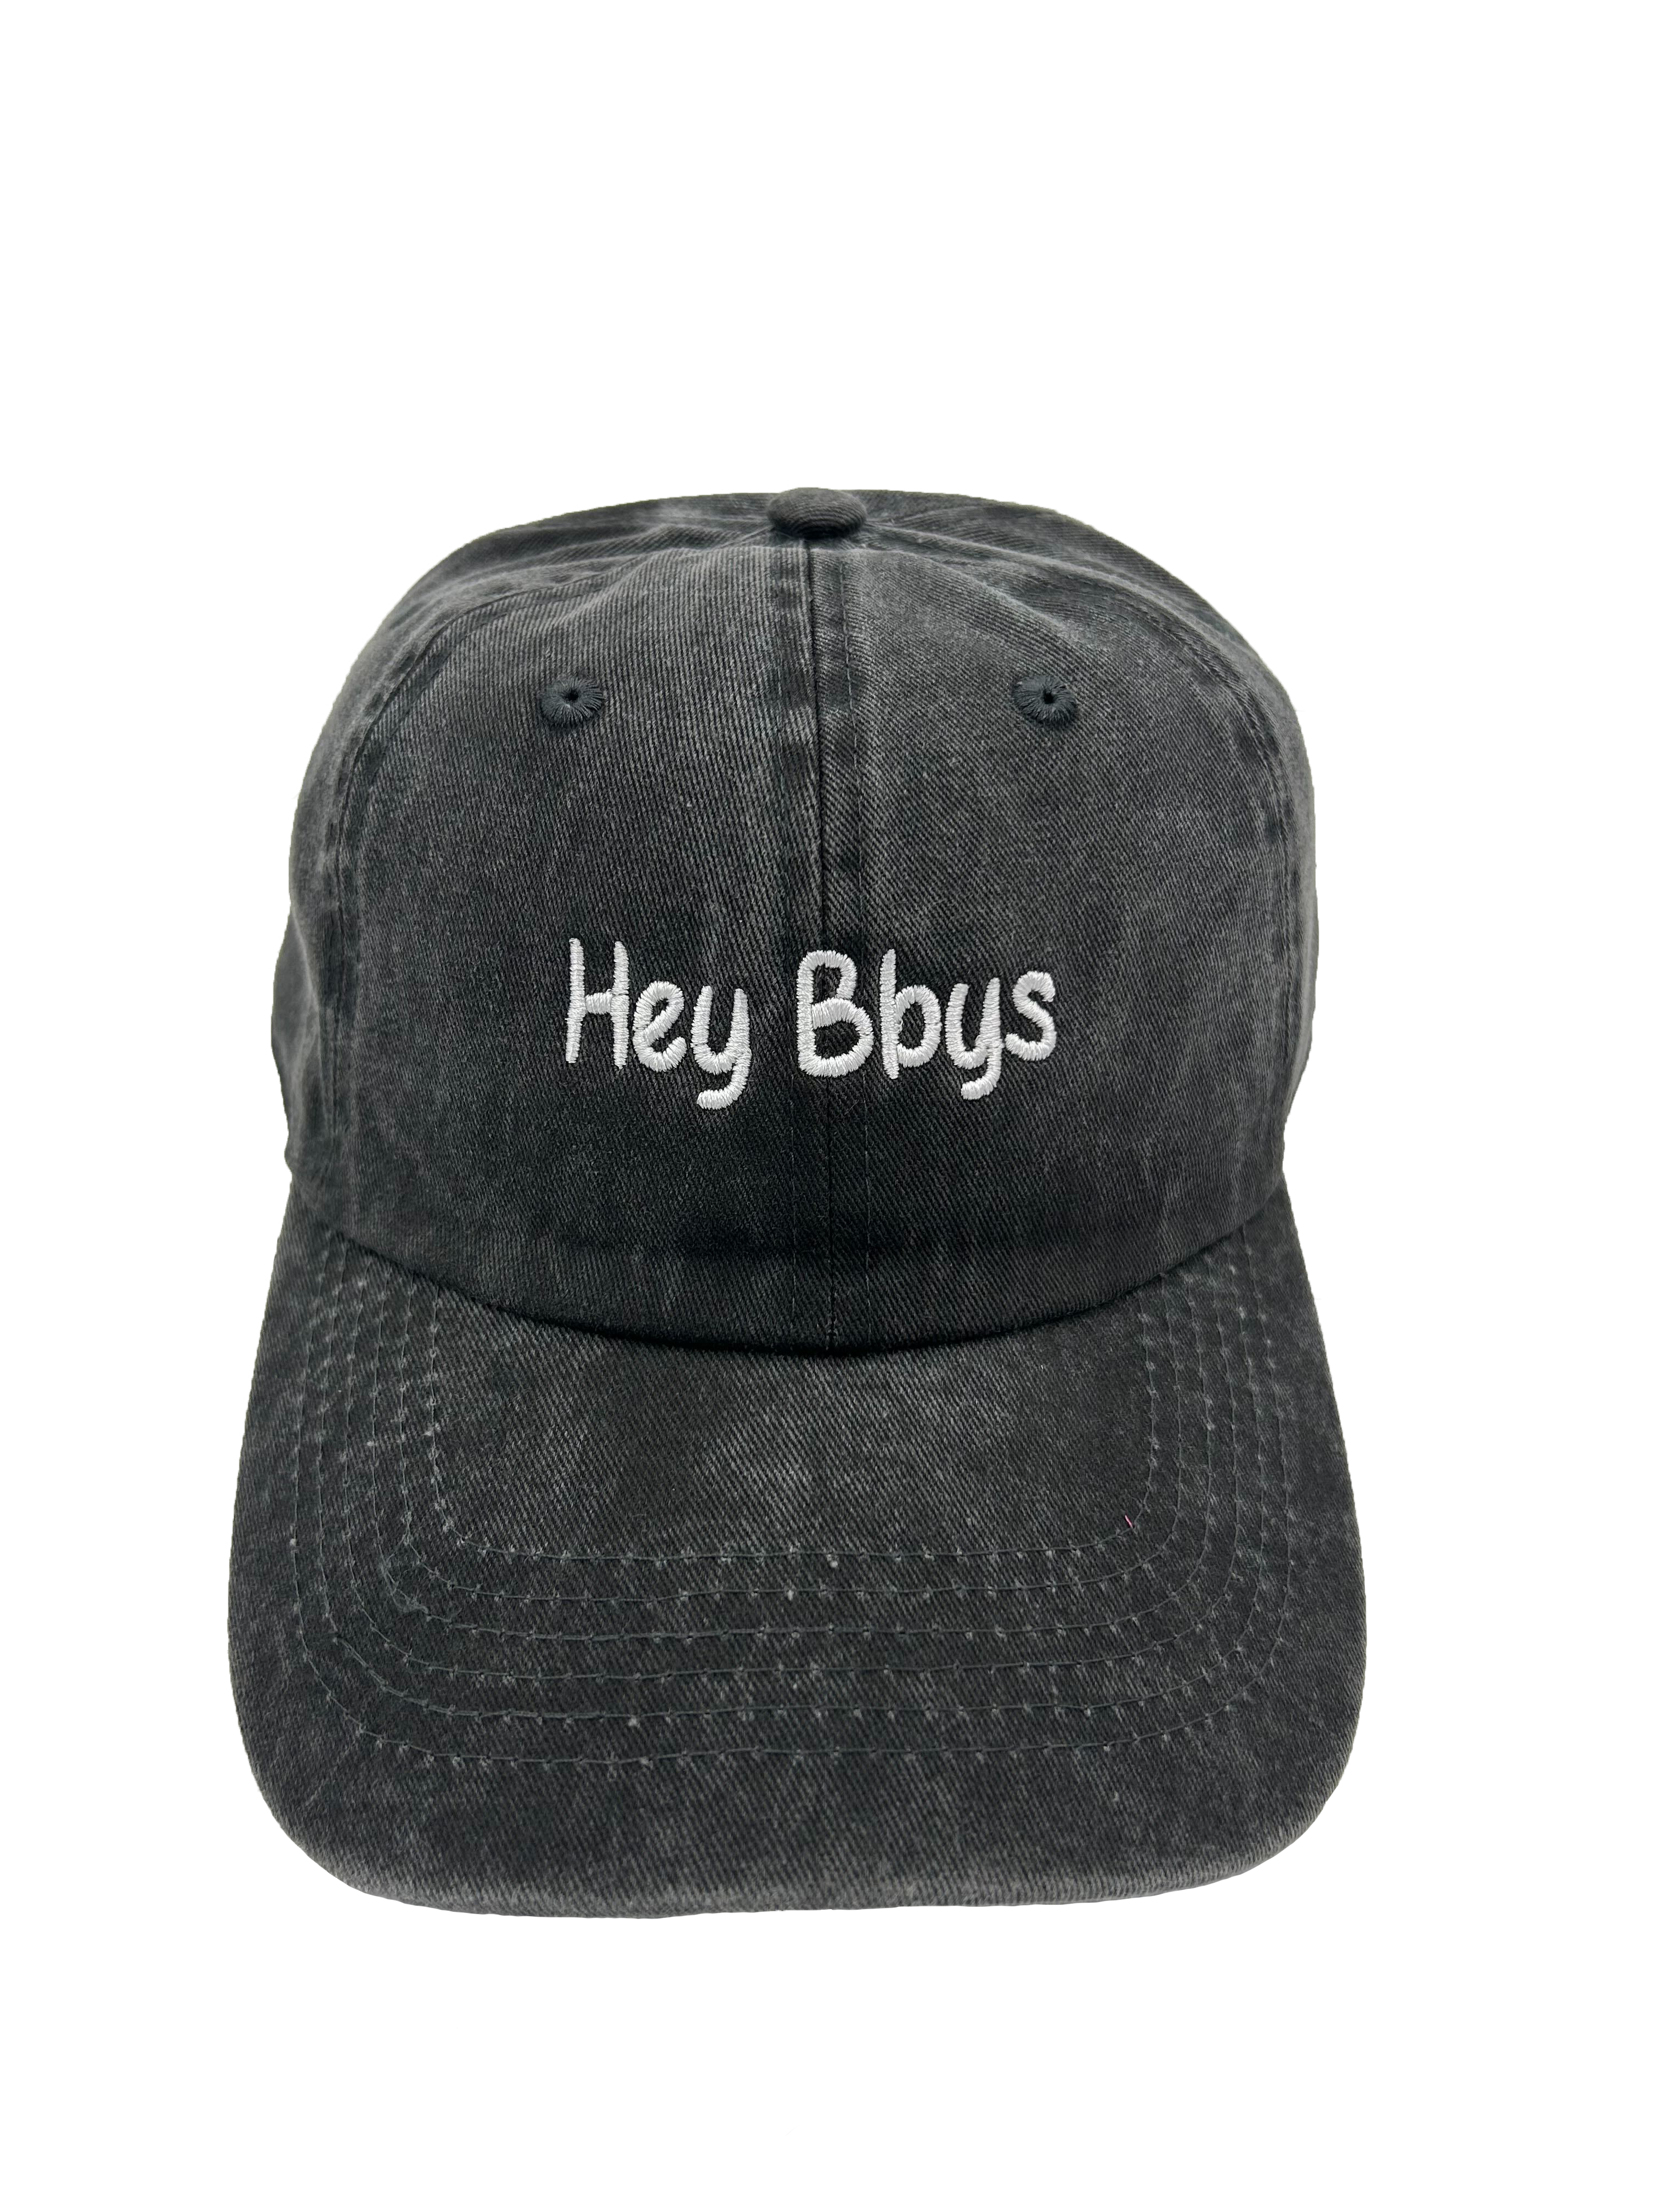 Hey Bbys Vintage Black Dad Hat